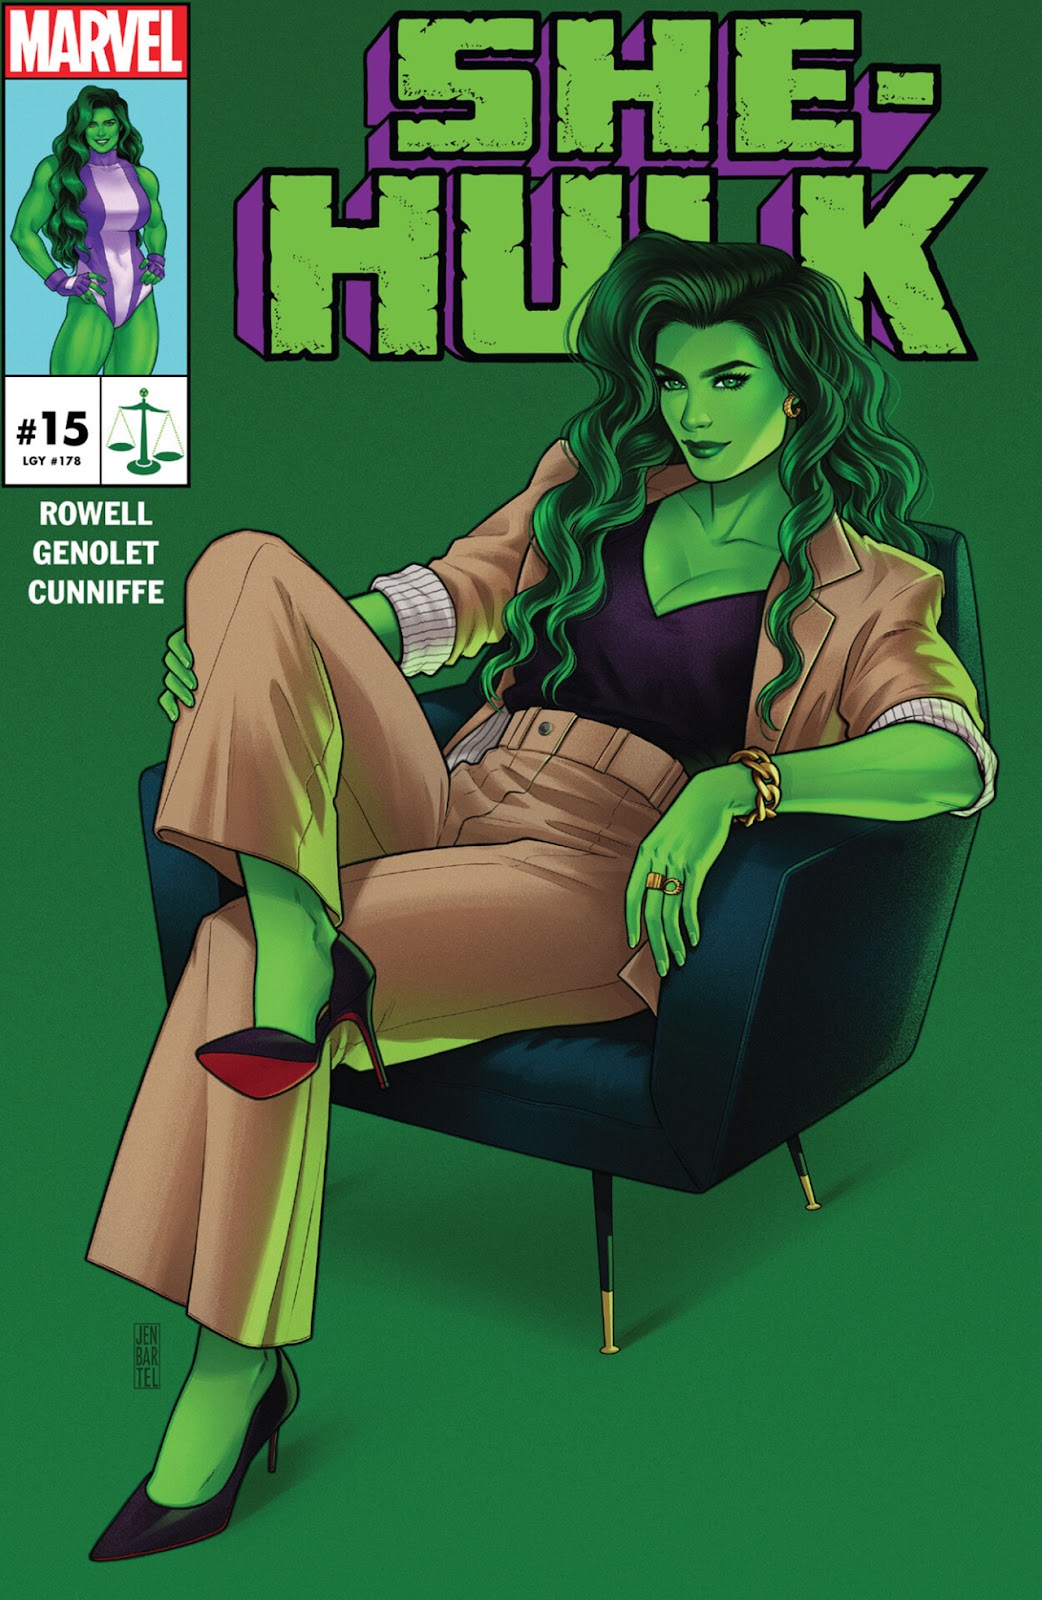 Minhas Leituras (15/2022): Marvel-Verse – Mulher-Hulk – Raio X